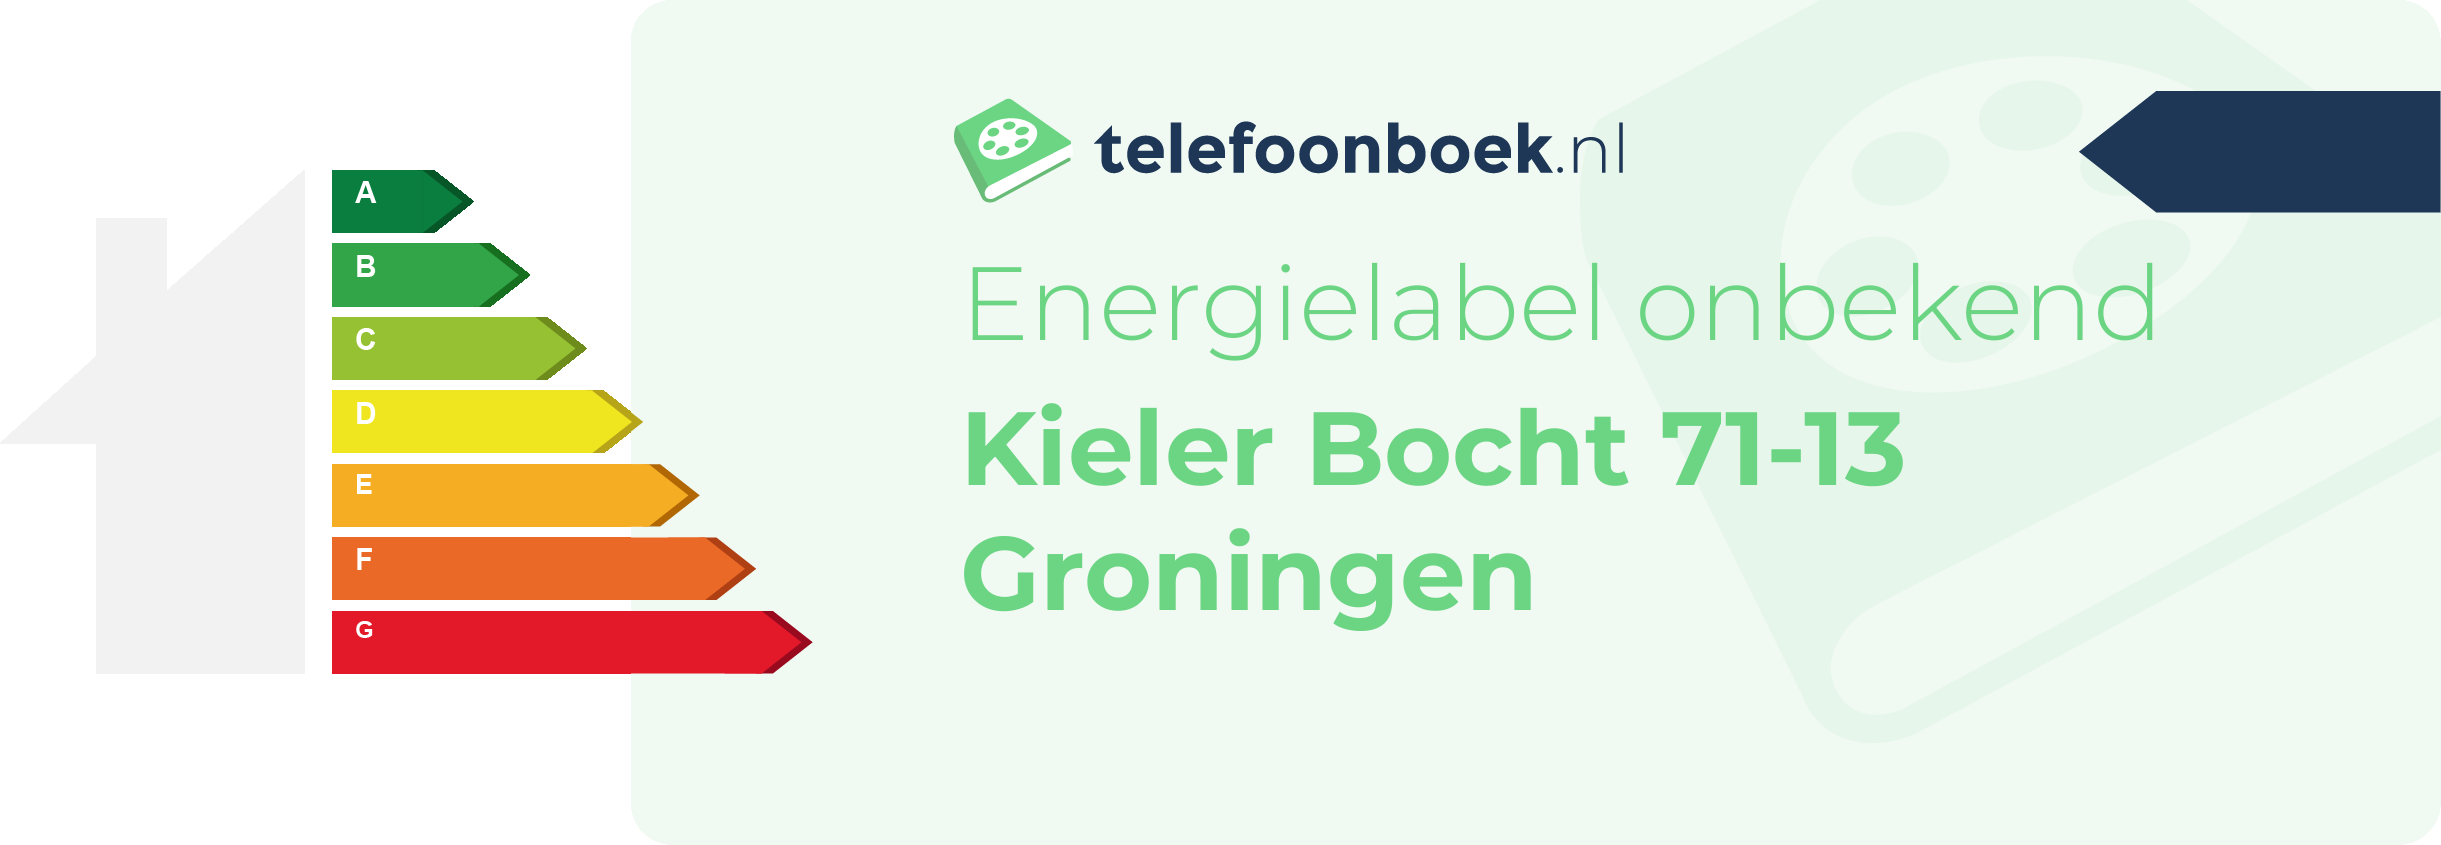 Energielabel Kieler Bocht 71-13 Groningen